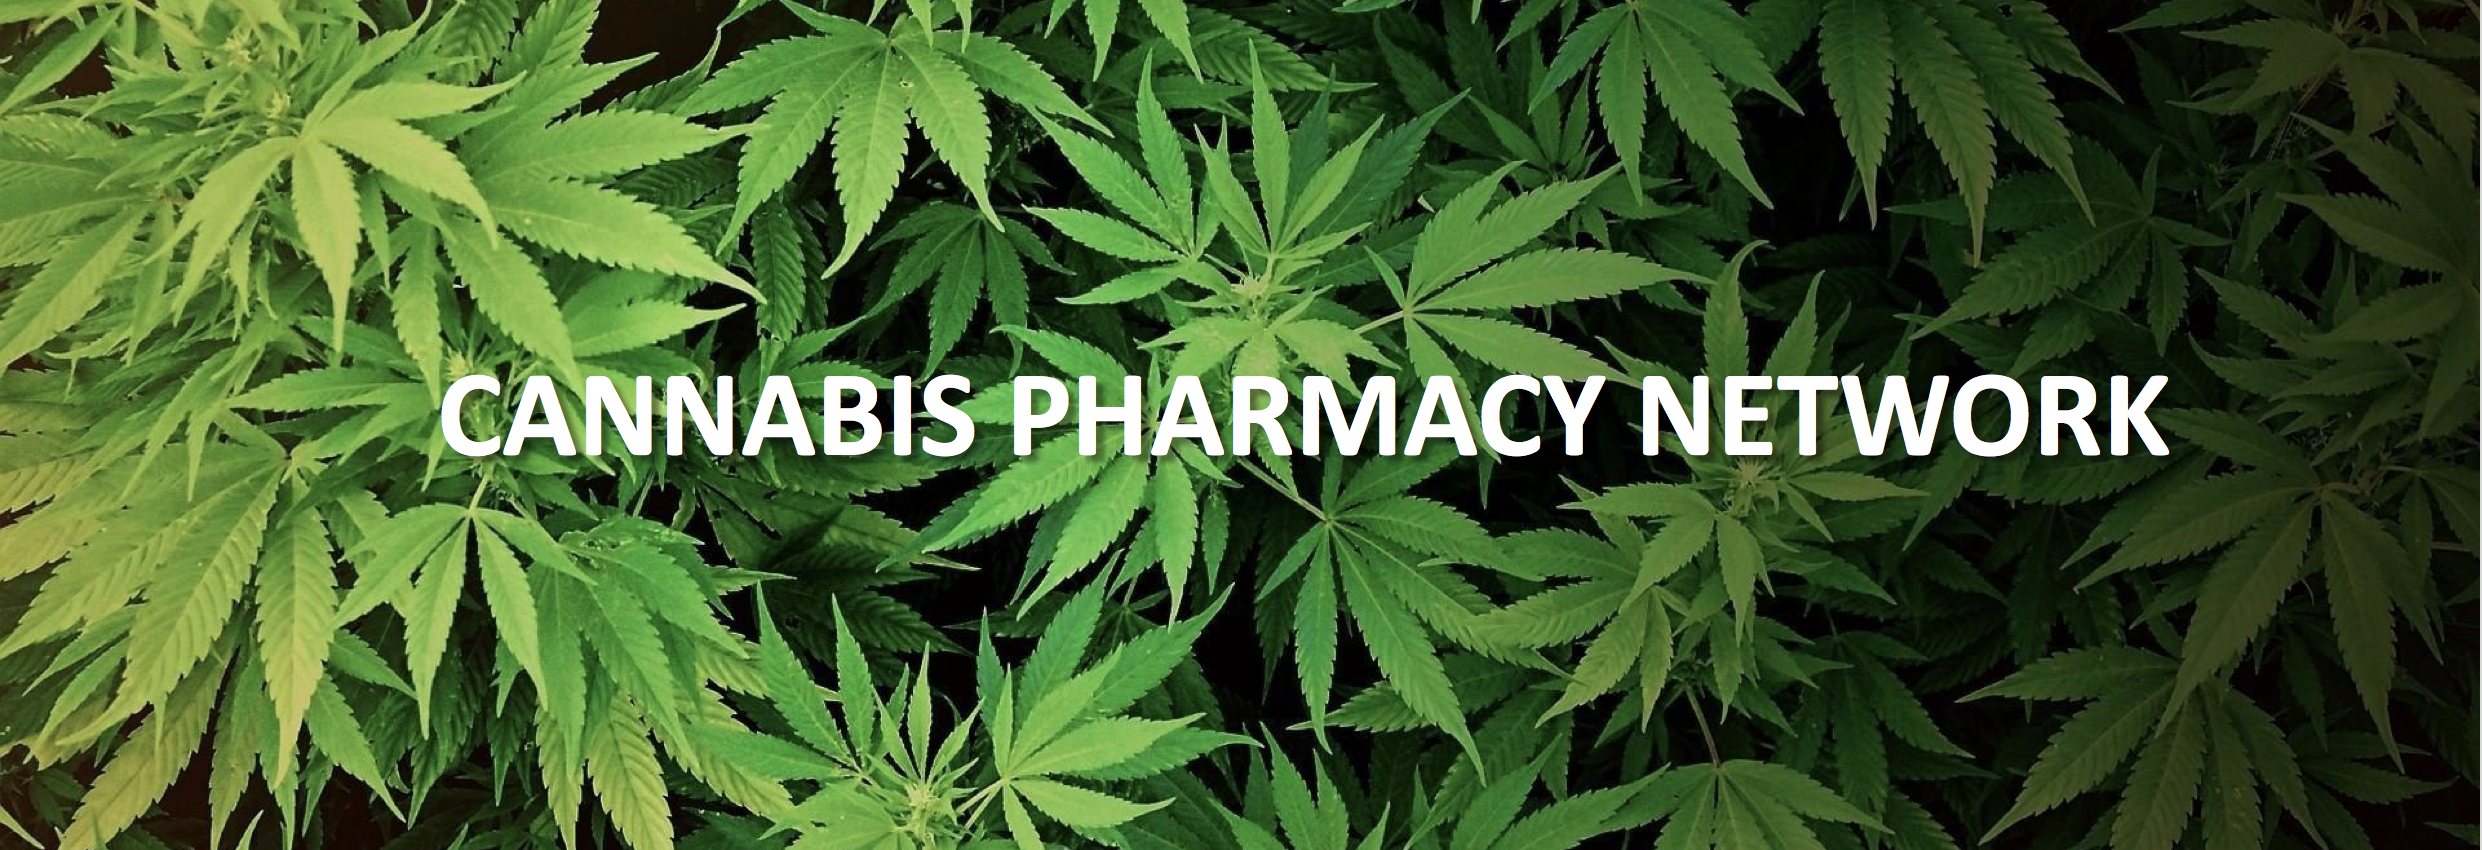 Cannabis Pharmacy Network